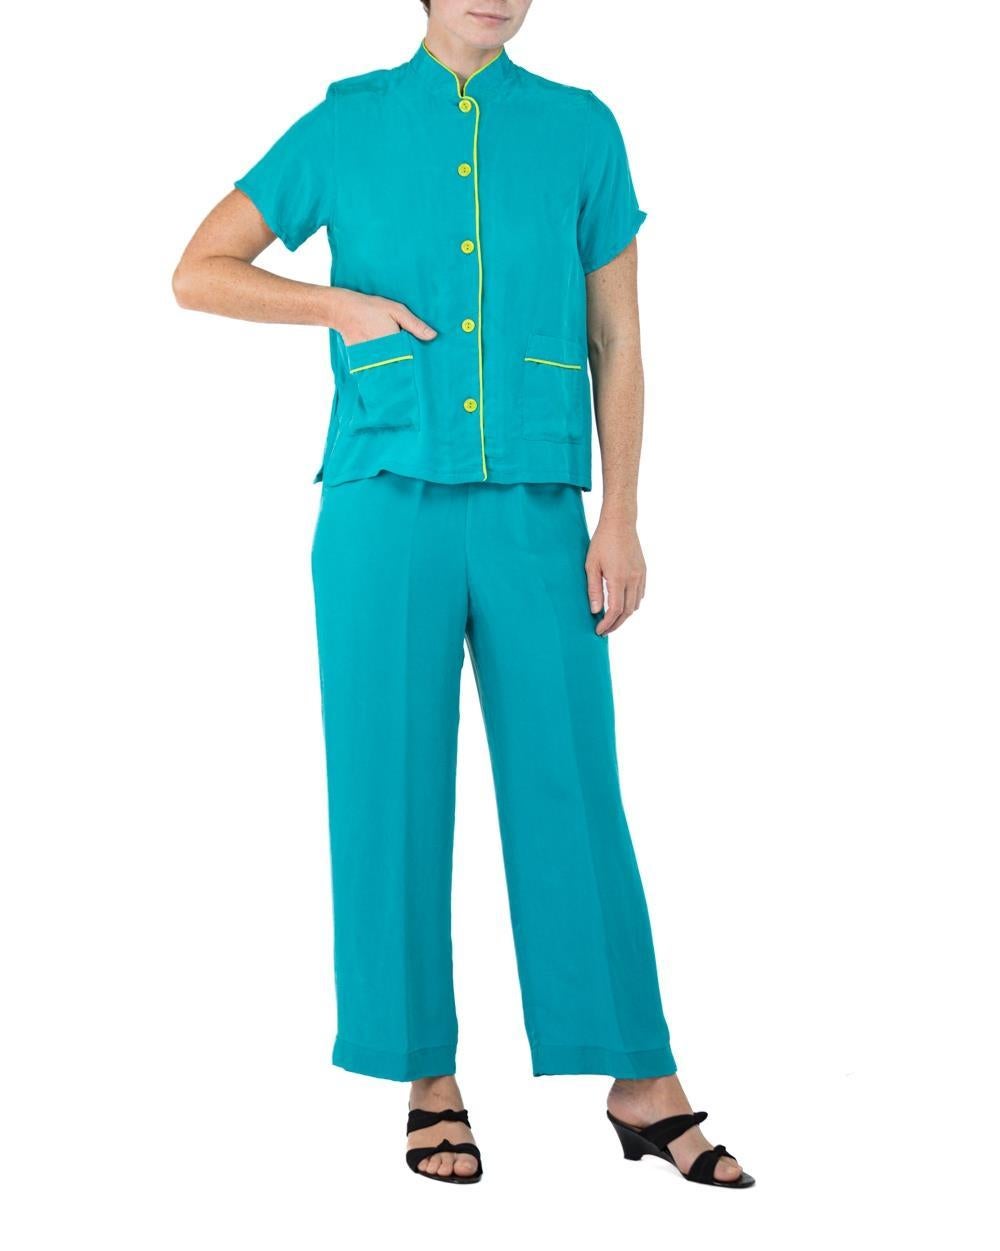 Morphew Collection Teal & Neon Yellow Trim Cold Rayon Bias Pajamas Master Medium For Sale 1